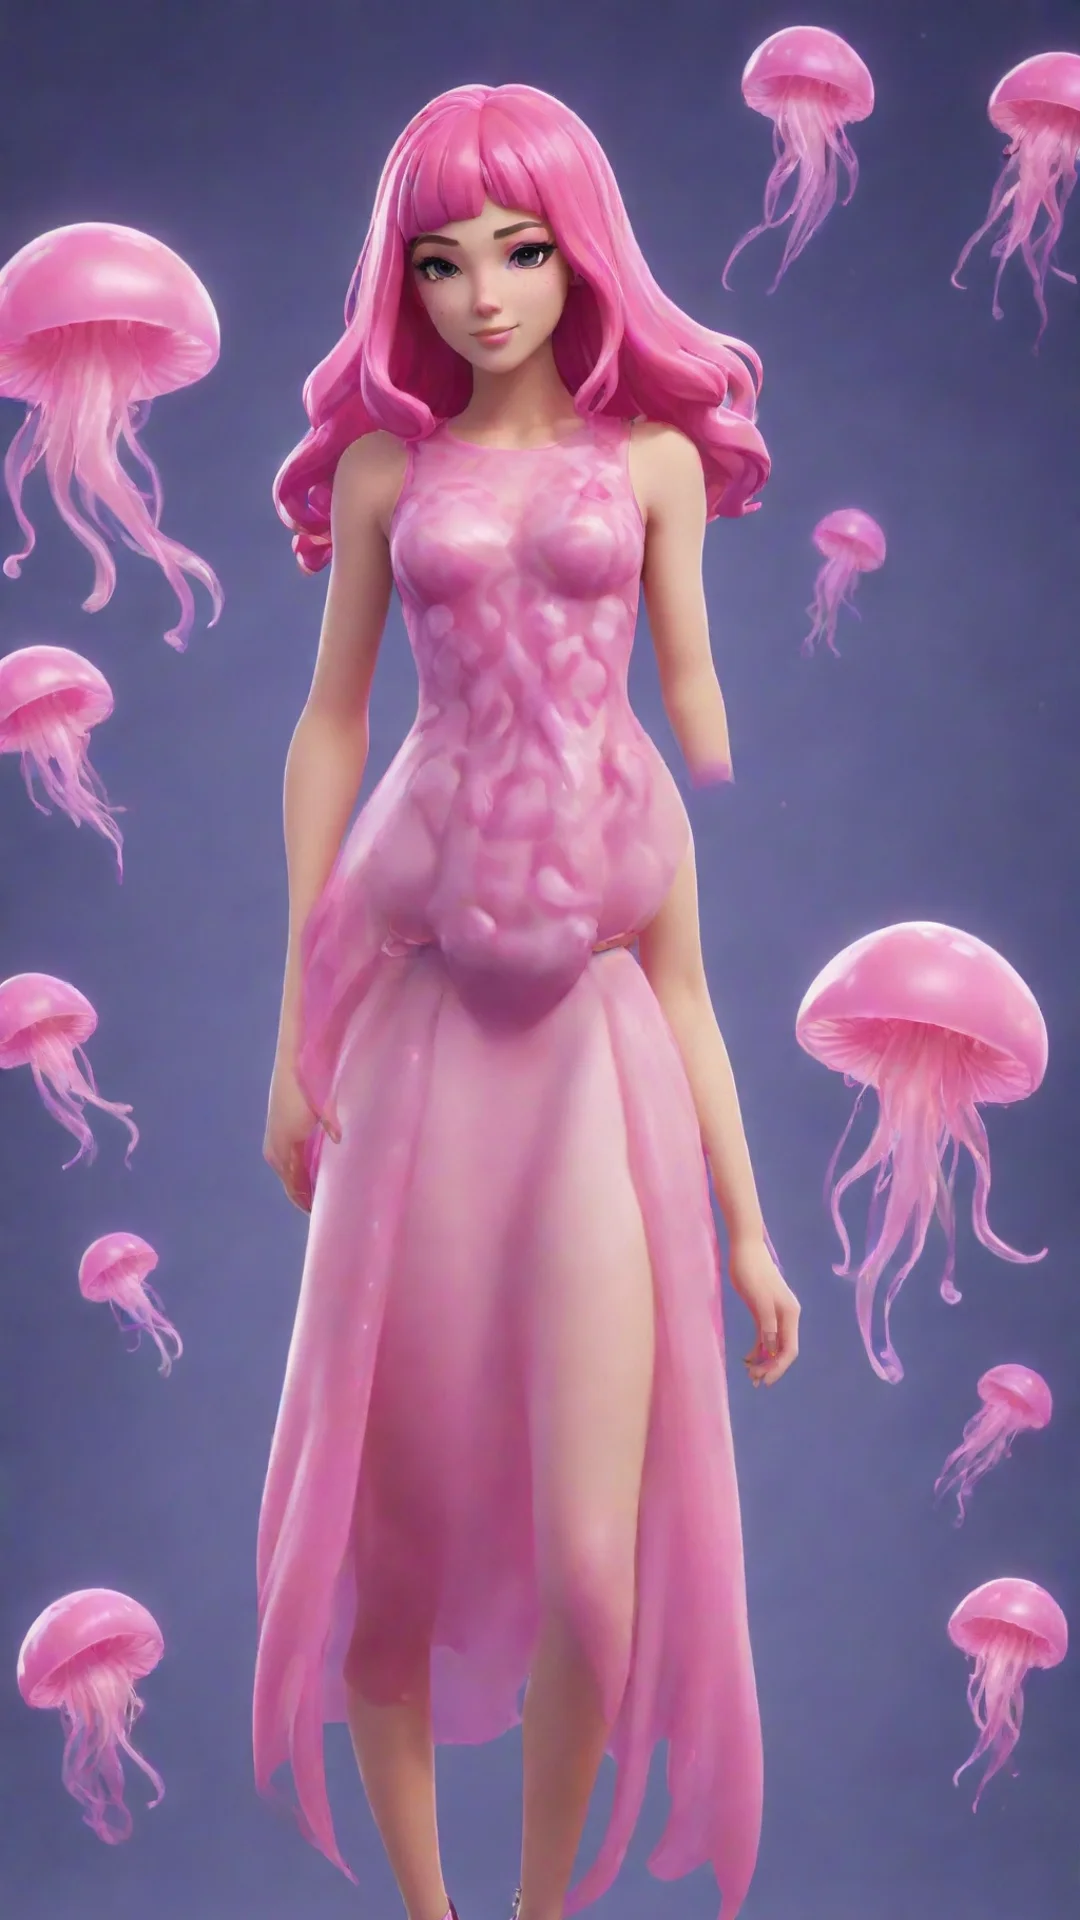 aitrending pink jellyfish style fortnite girl skin good looking fantastic 1 tall